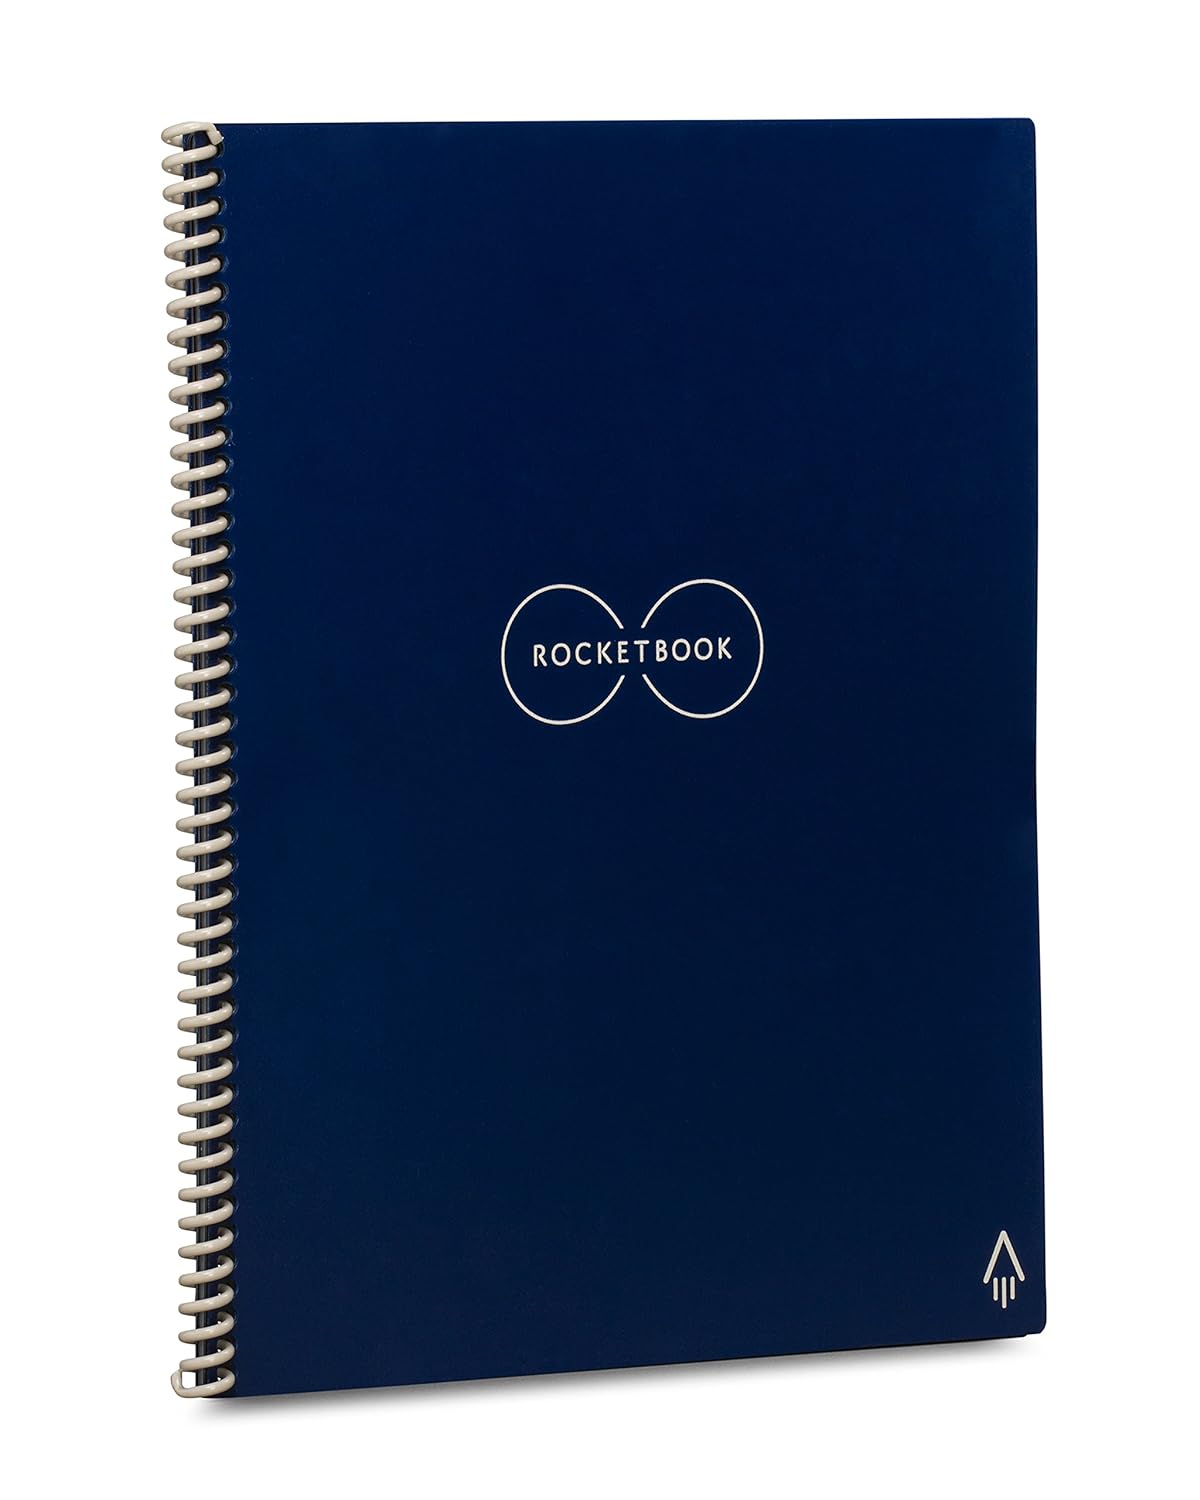 Rocketbook Ever Last Smart Reusable Notebook, Letter Size, 8.5" x 11", Midnight Blue (EVR-L-K-CDF) by Rocketbook